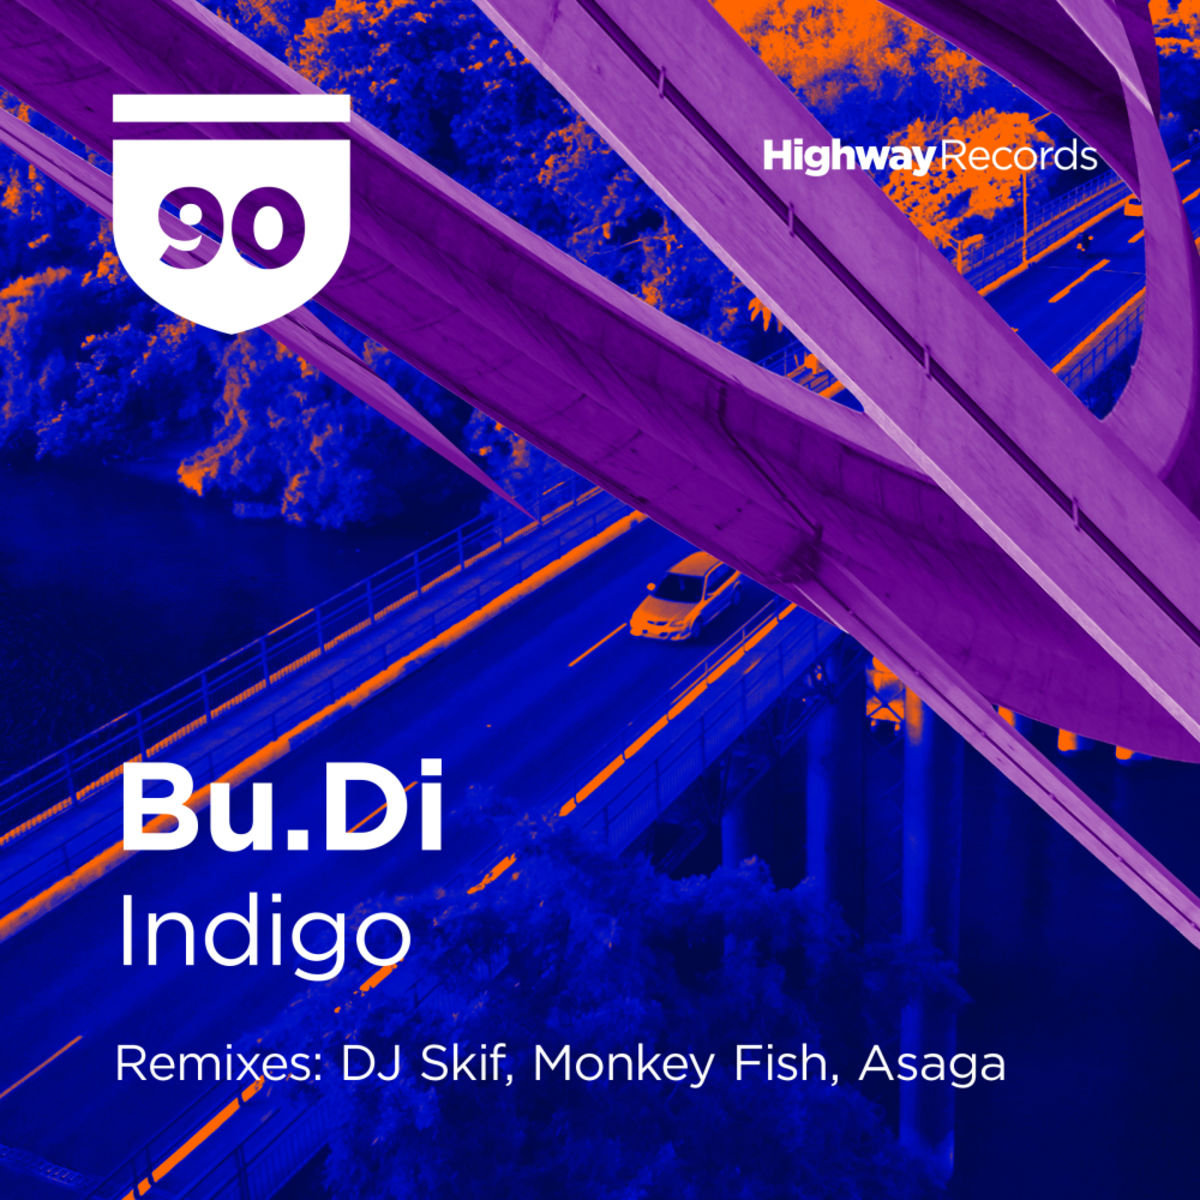 Bu.Di - Indigo / Highway Records